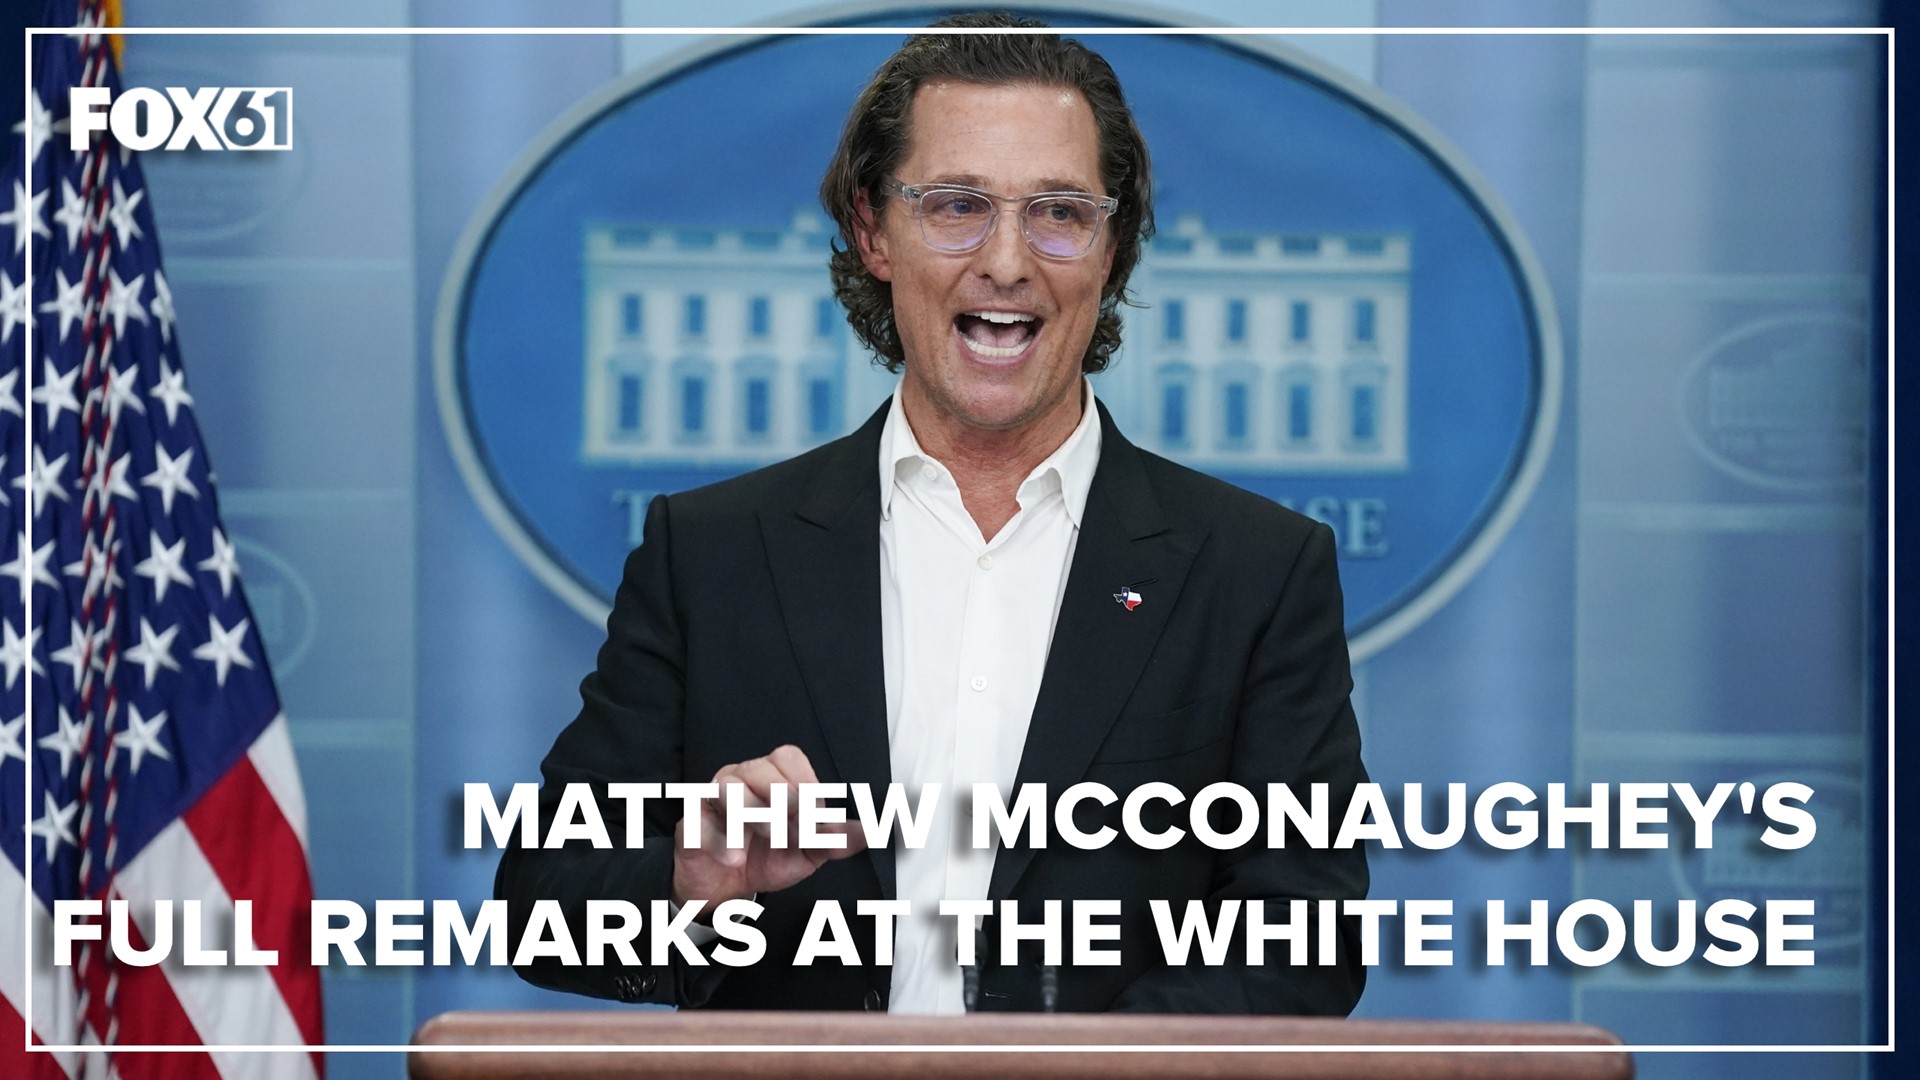 Academy Award-winning actor Matthew McConaughey offered an emotional call on Congress to “reach a higher ground” and pass gun control legislation.